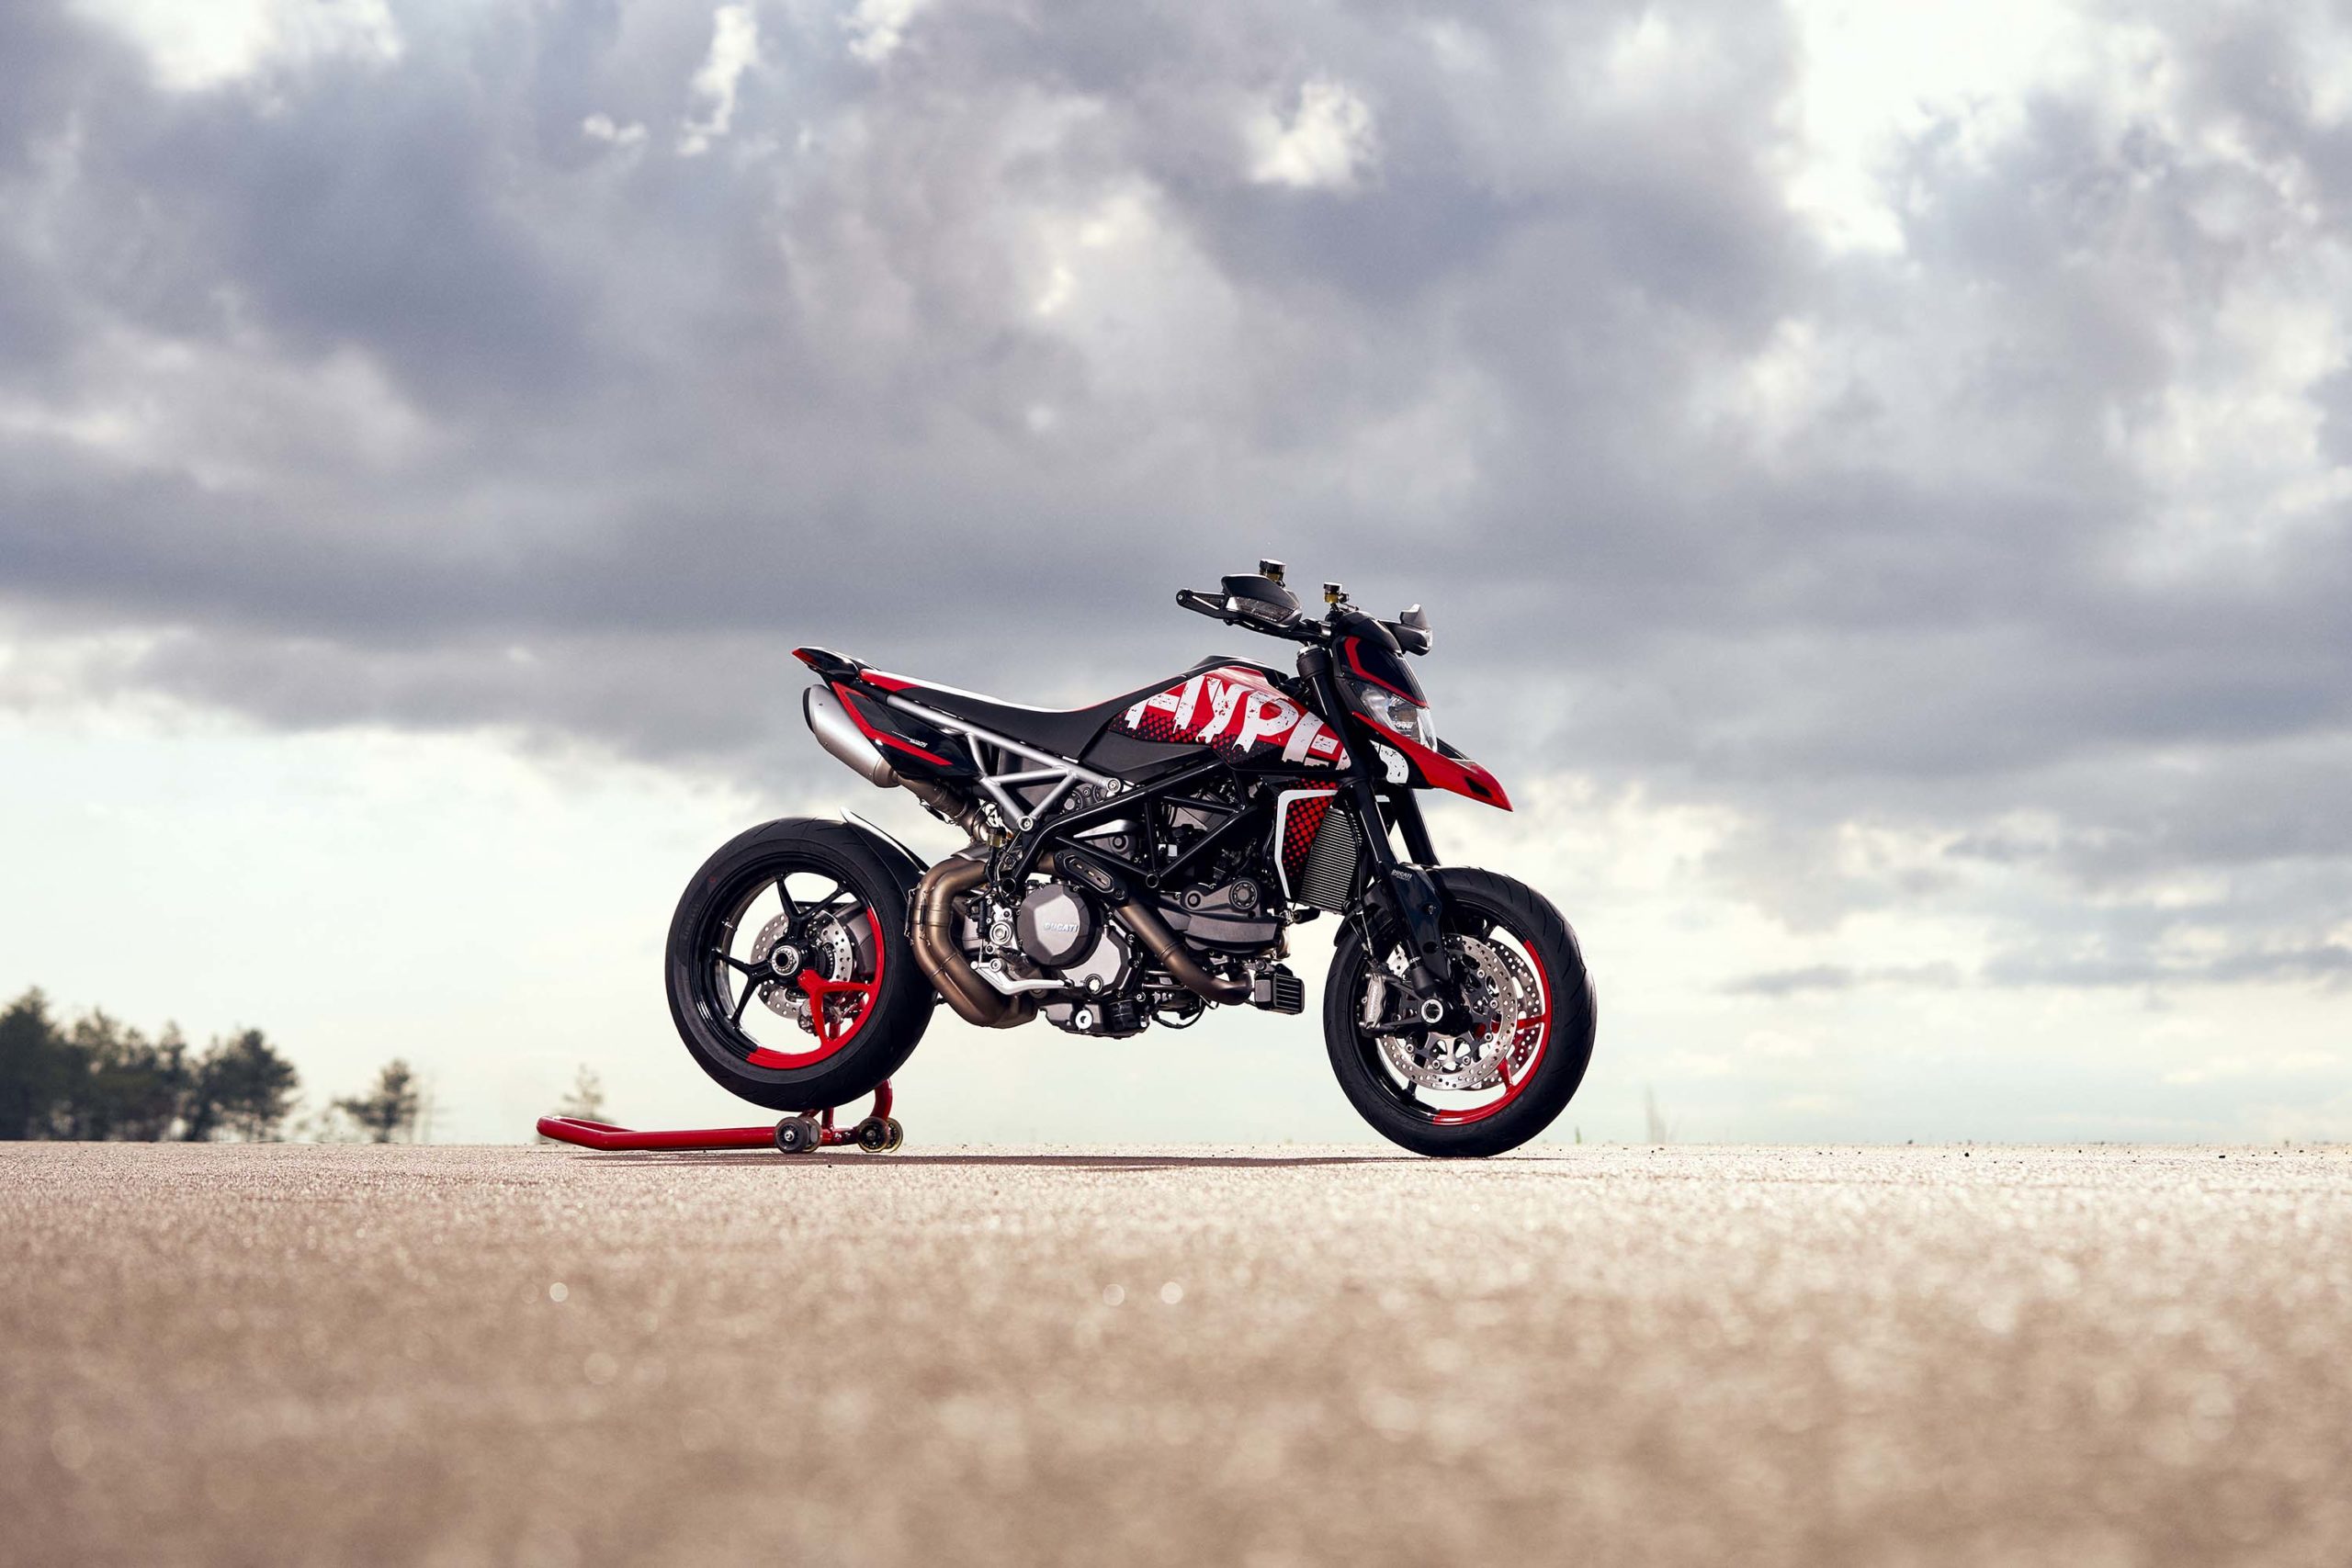 Ducati Hypermotard 950 RVE 2020